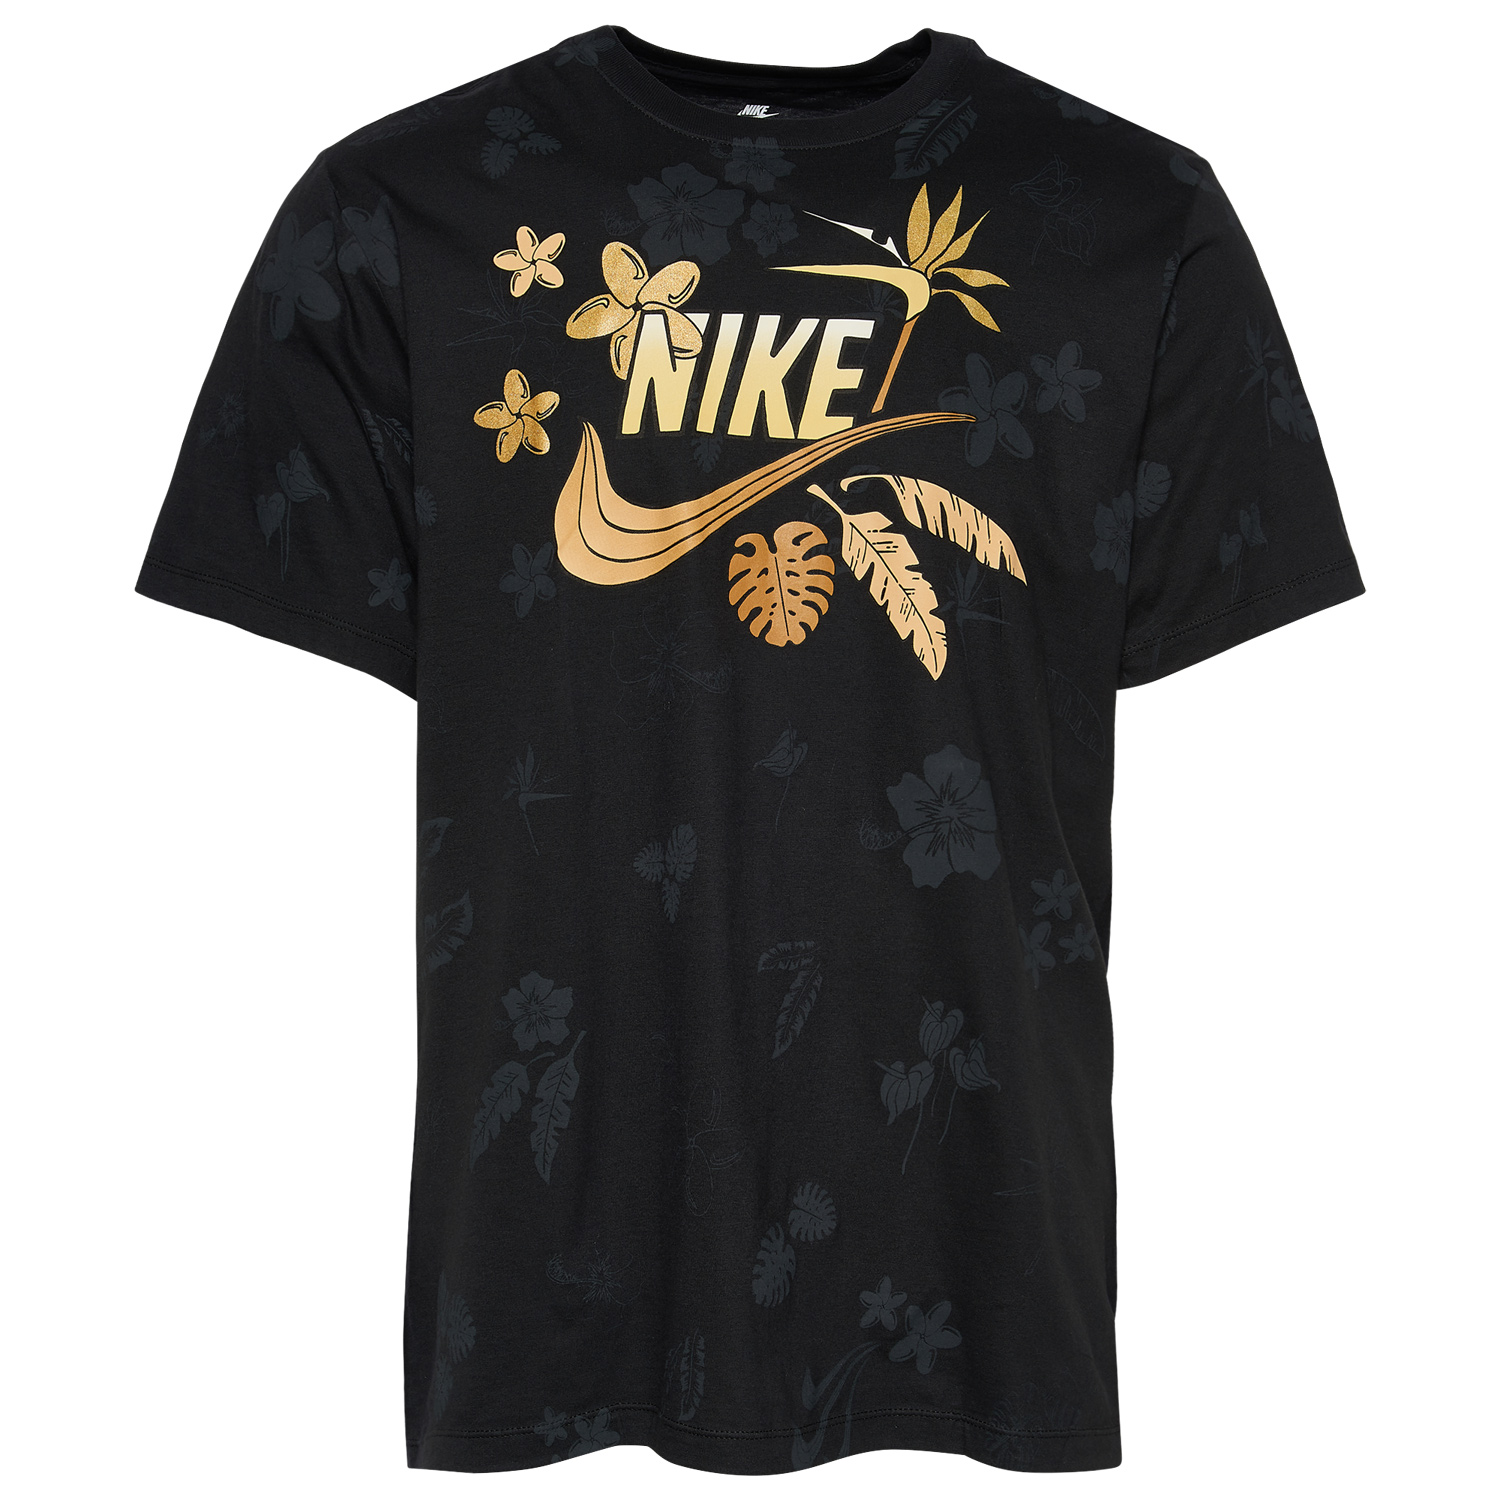 nike-palm-t-shirt-black-gold